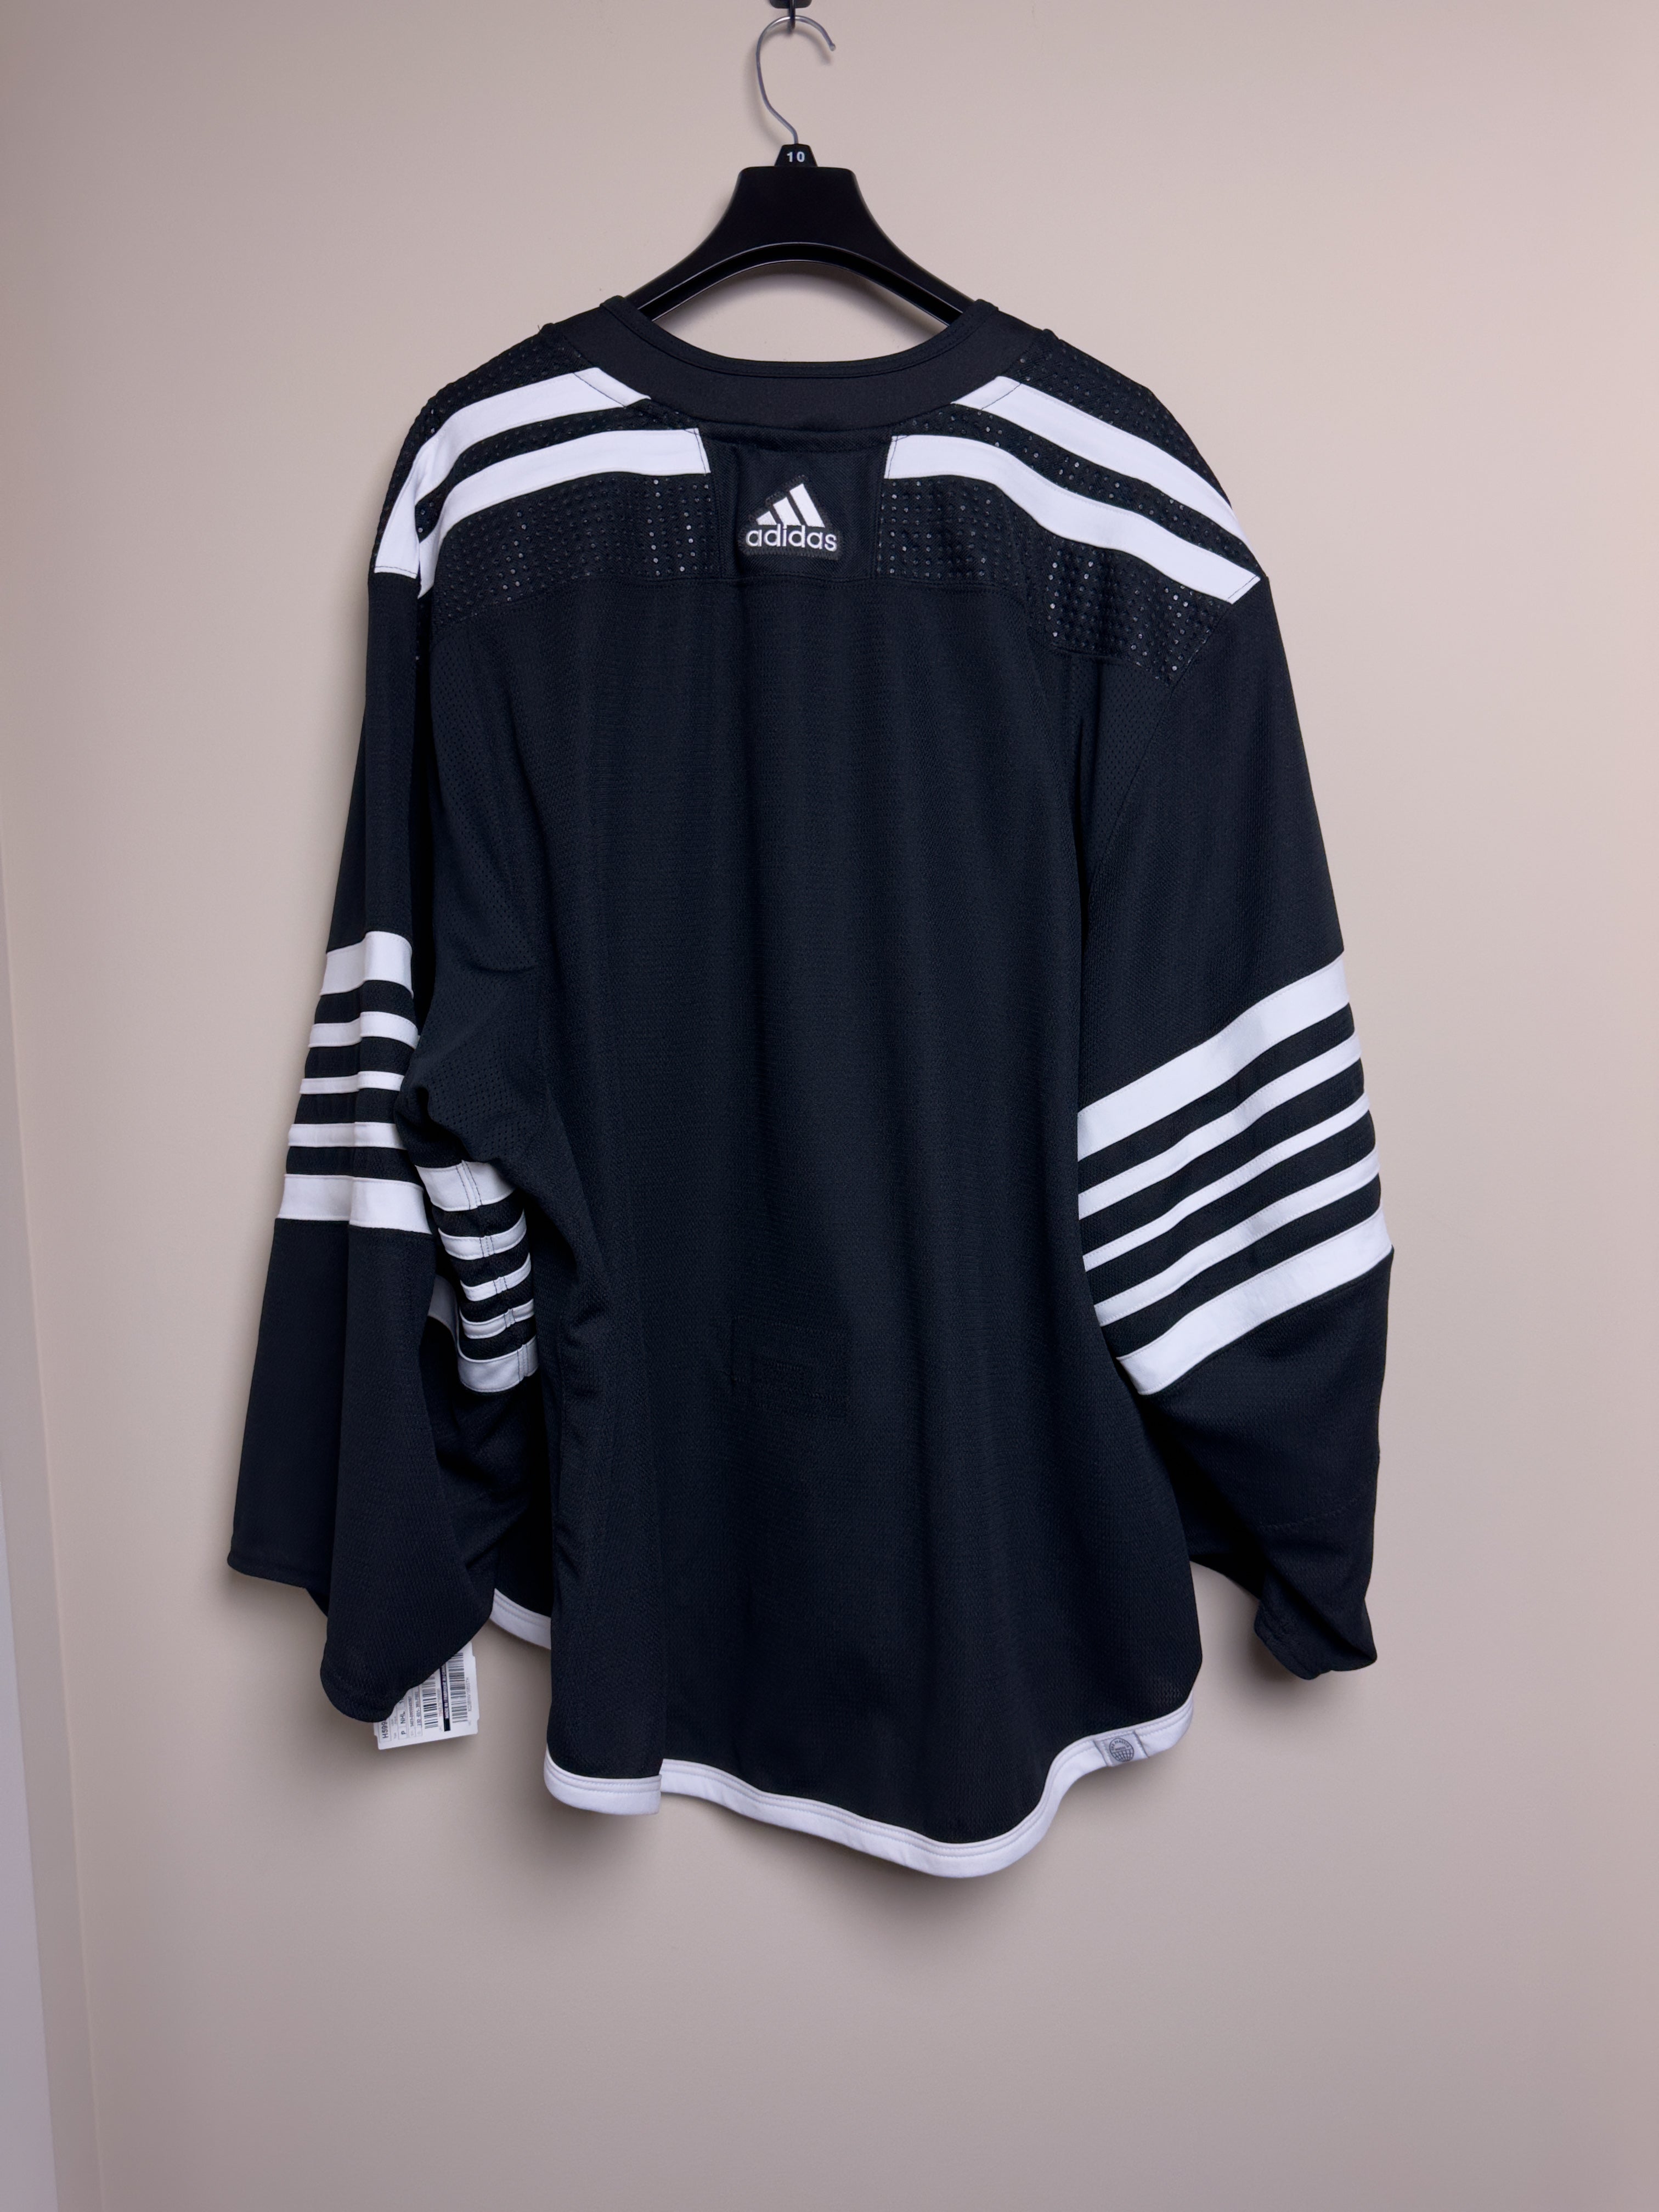 New Jersey Devils NHL Adidas Primegreen MiC Team Issued Alternate Jersey Size 58G (Goalie Cut)